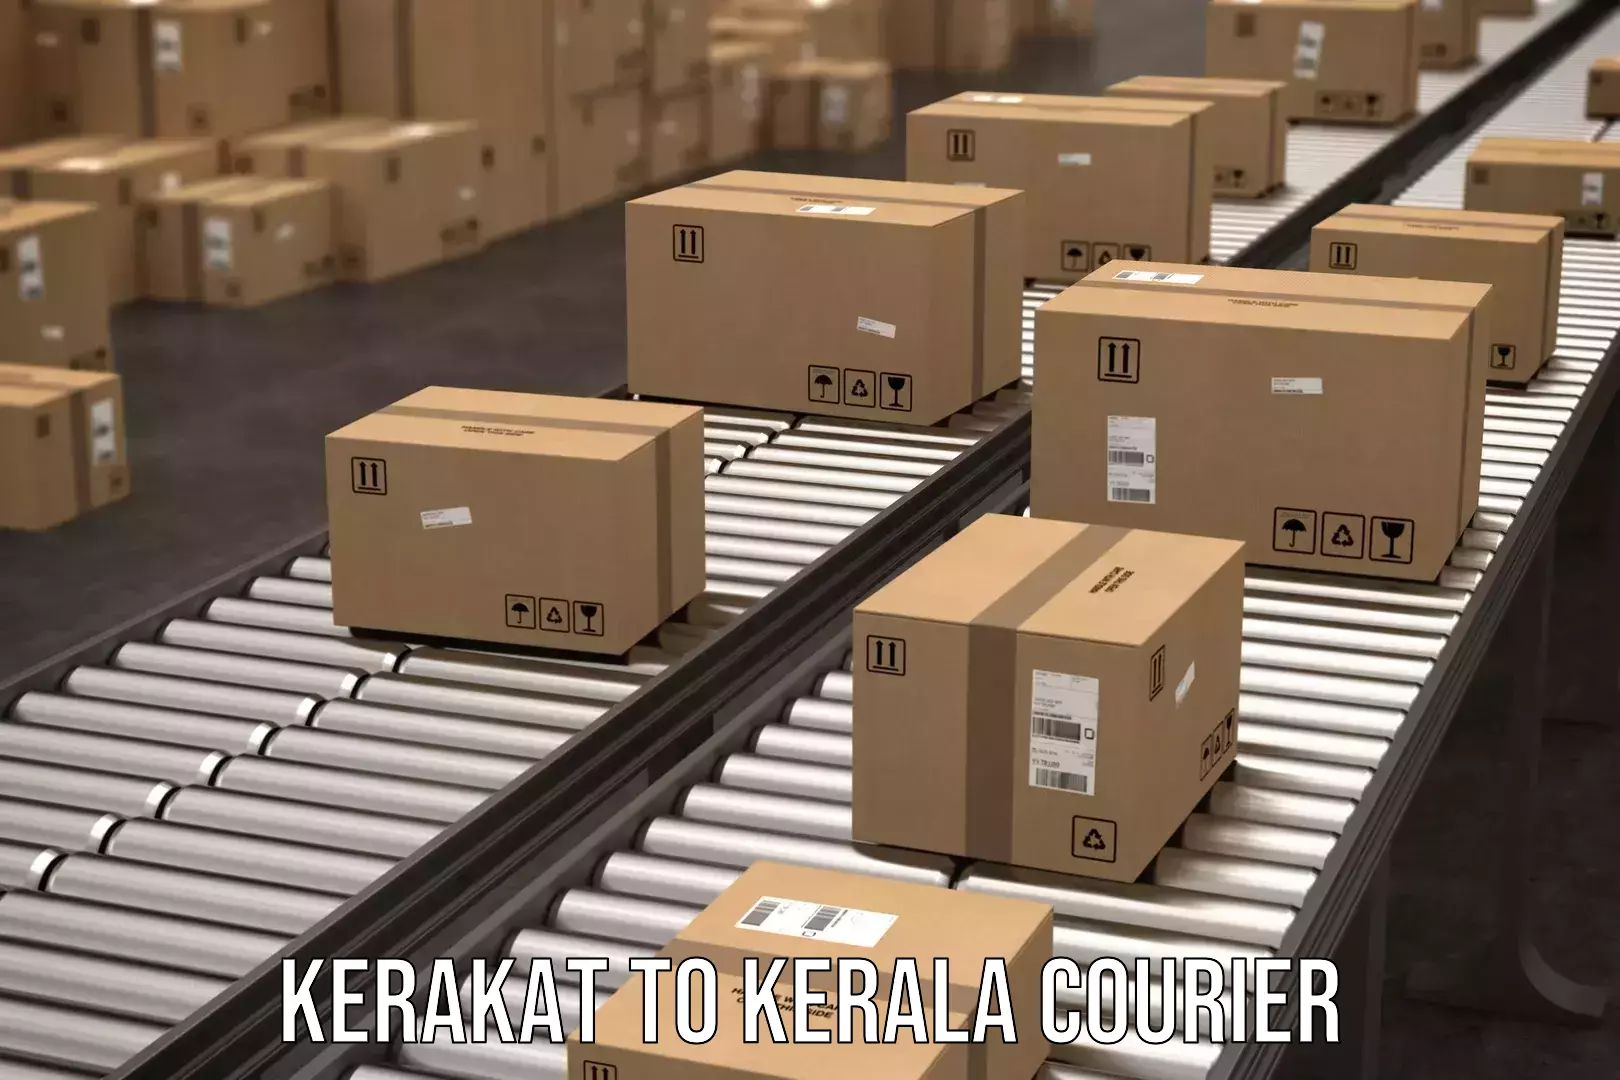 Enhanced tracking features Kerakat to Ponekkara